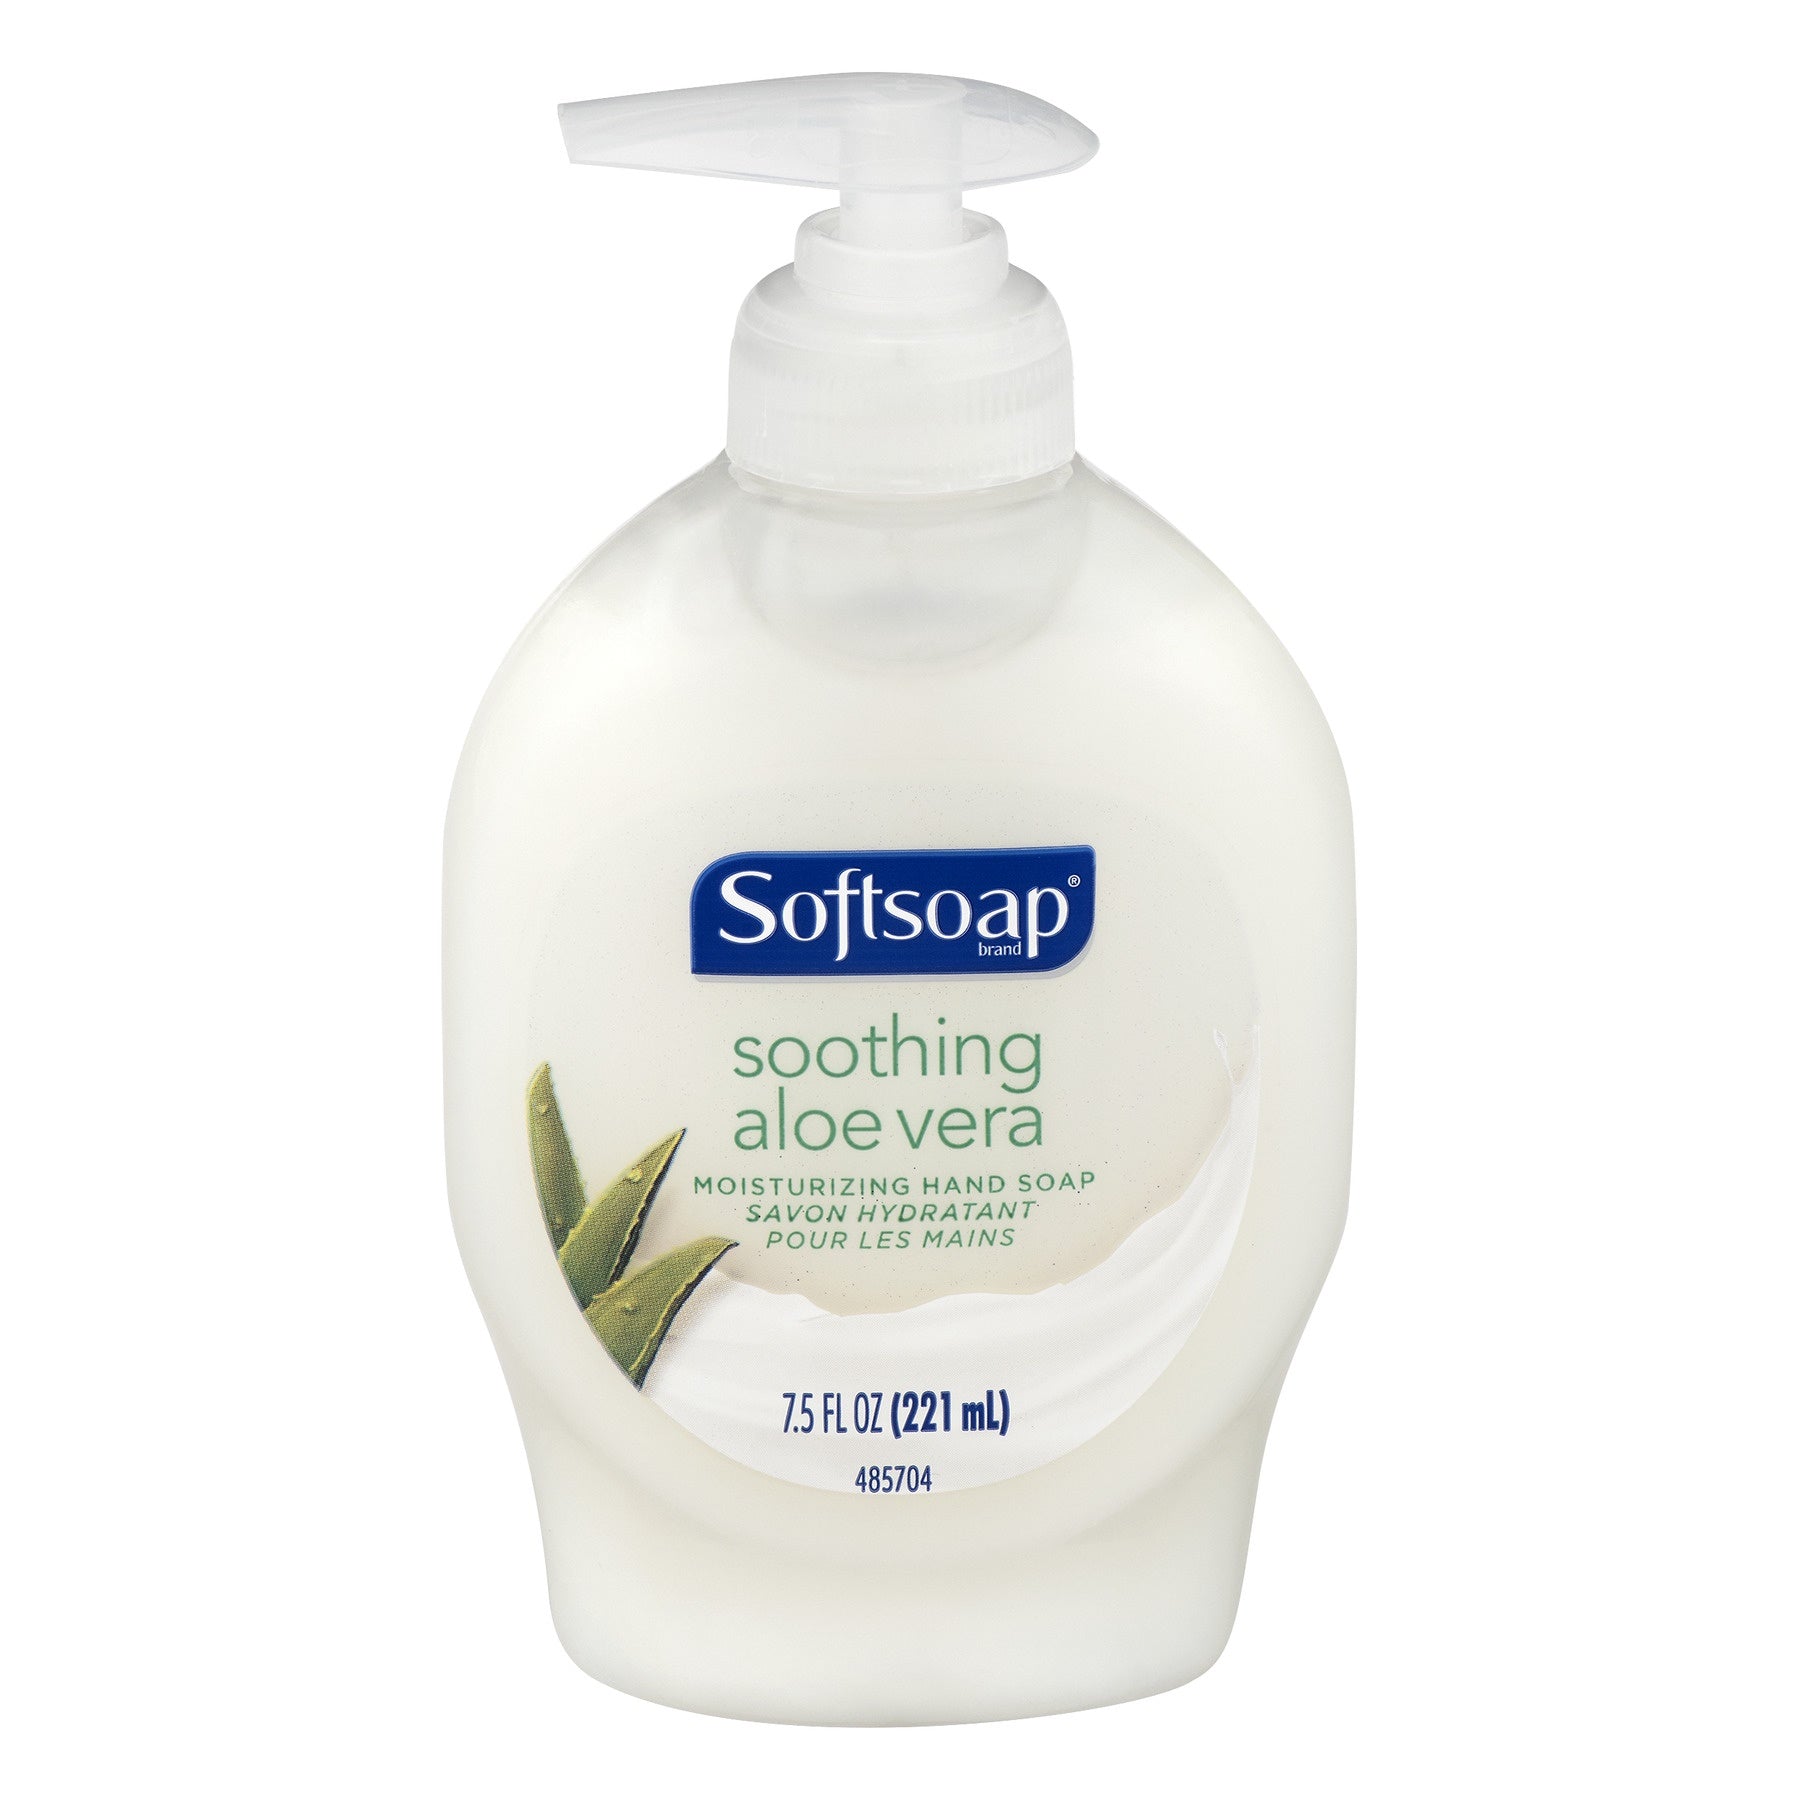 Softsoap Aloe Vera Moisturizing Hand Soap 7.5 fl oz